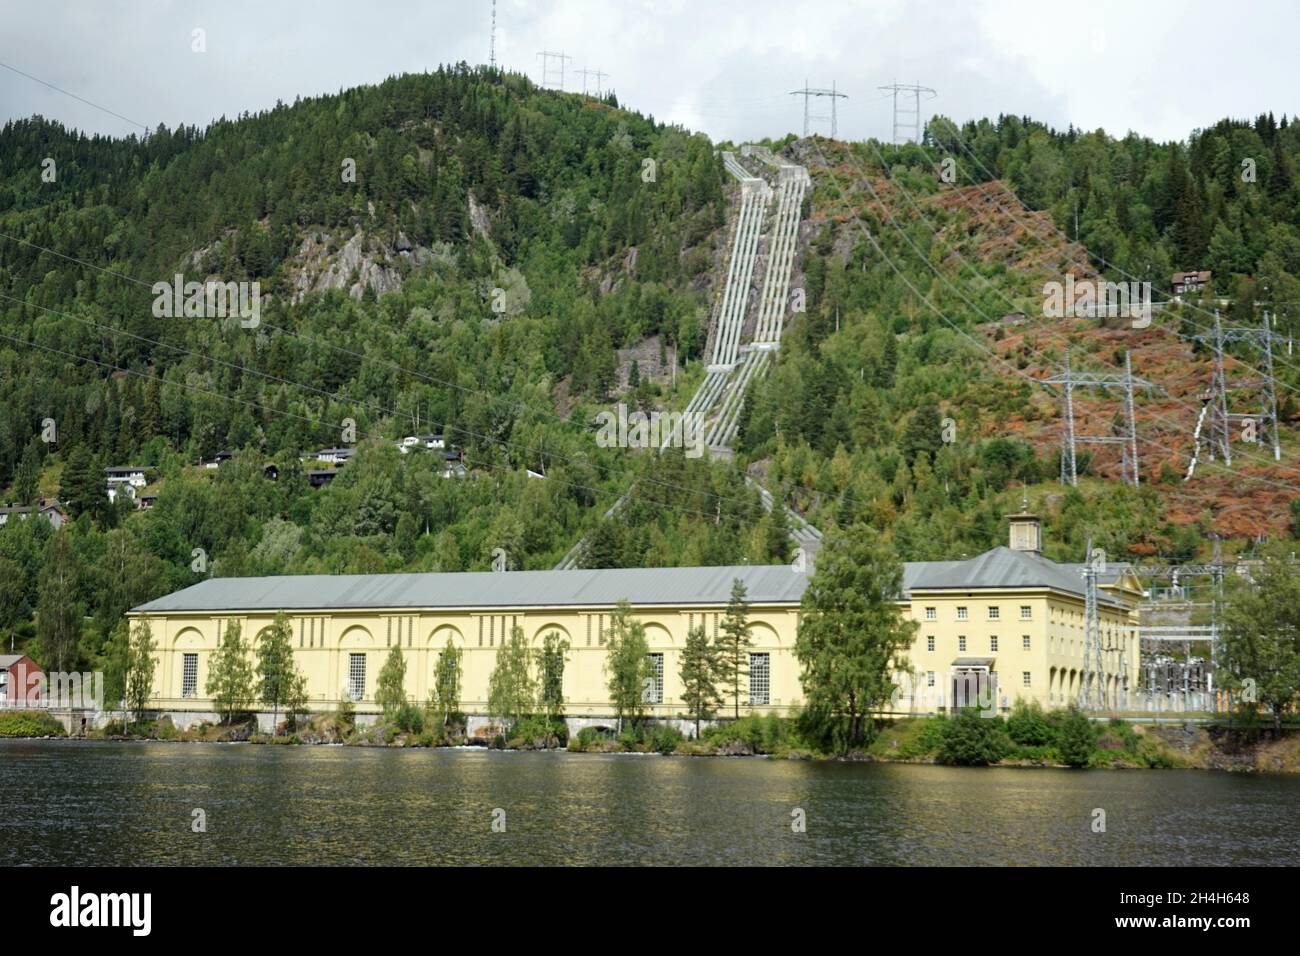 Vemork hydroelectric power plant power station, Norwegian Industrial Workers' Museum, near Rjukan, Tinn municipality, Fylke Telemark, Norway Stock Photo